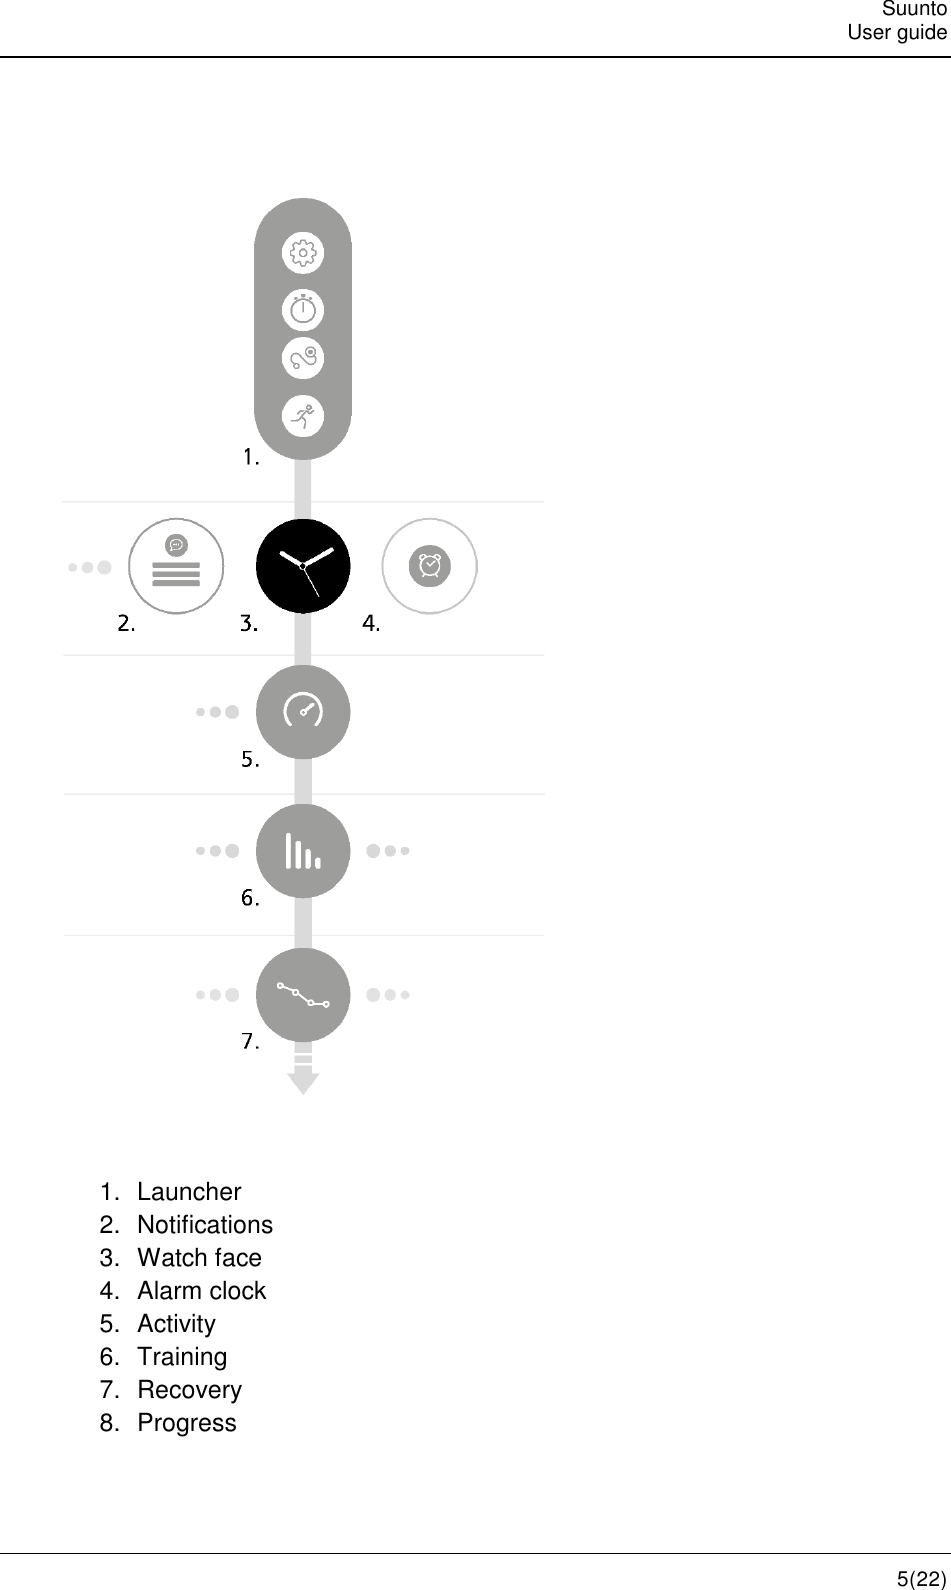   Suunto   User guide   5(22)   1.  Launcher 2.  Notifications 3.  Watch face 4.  Alarm clock 5.  Activity 6.  Training 7.  Recovery 8.  Progress  